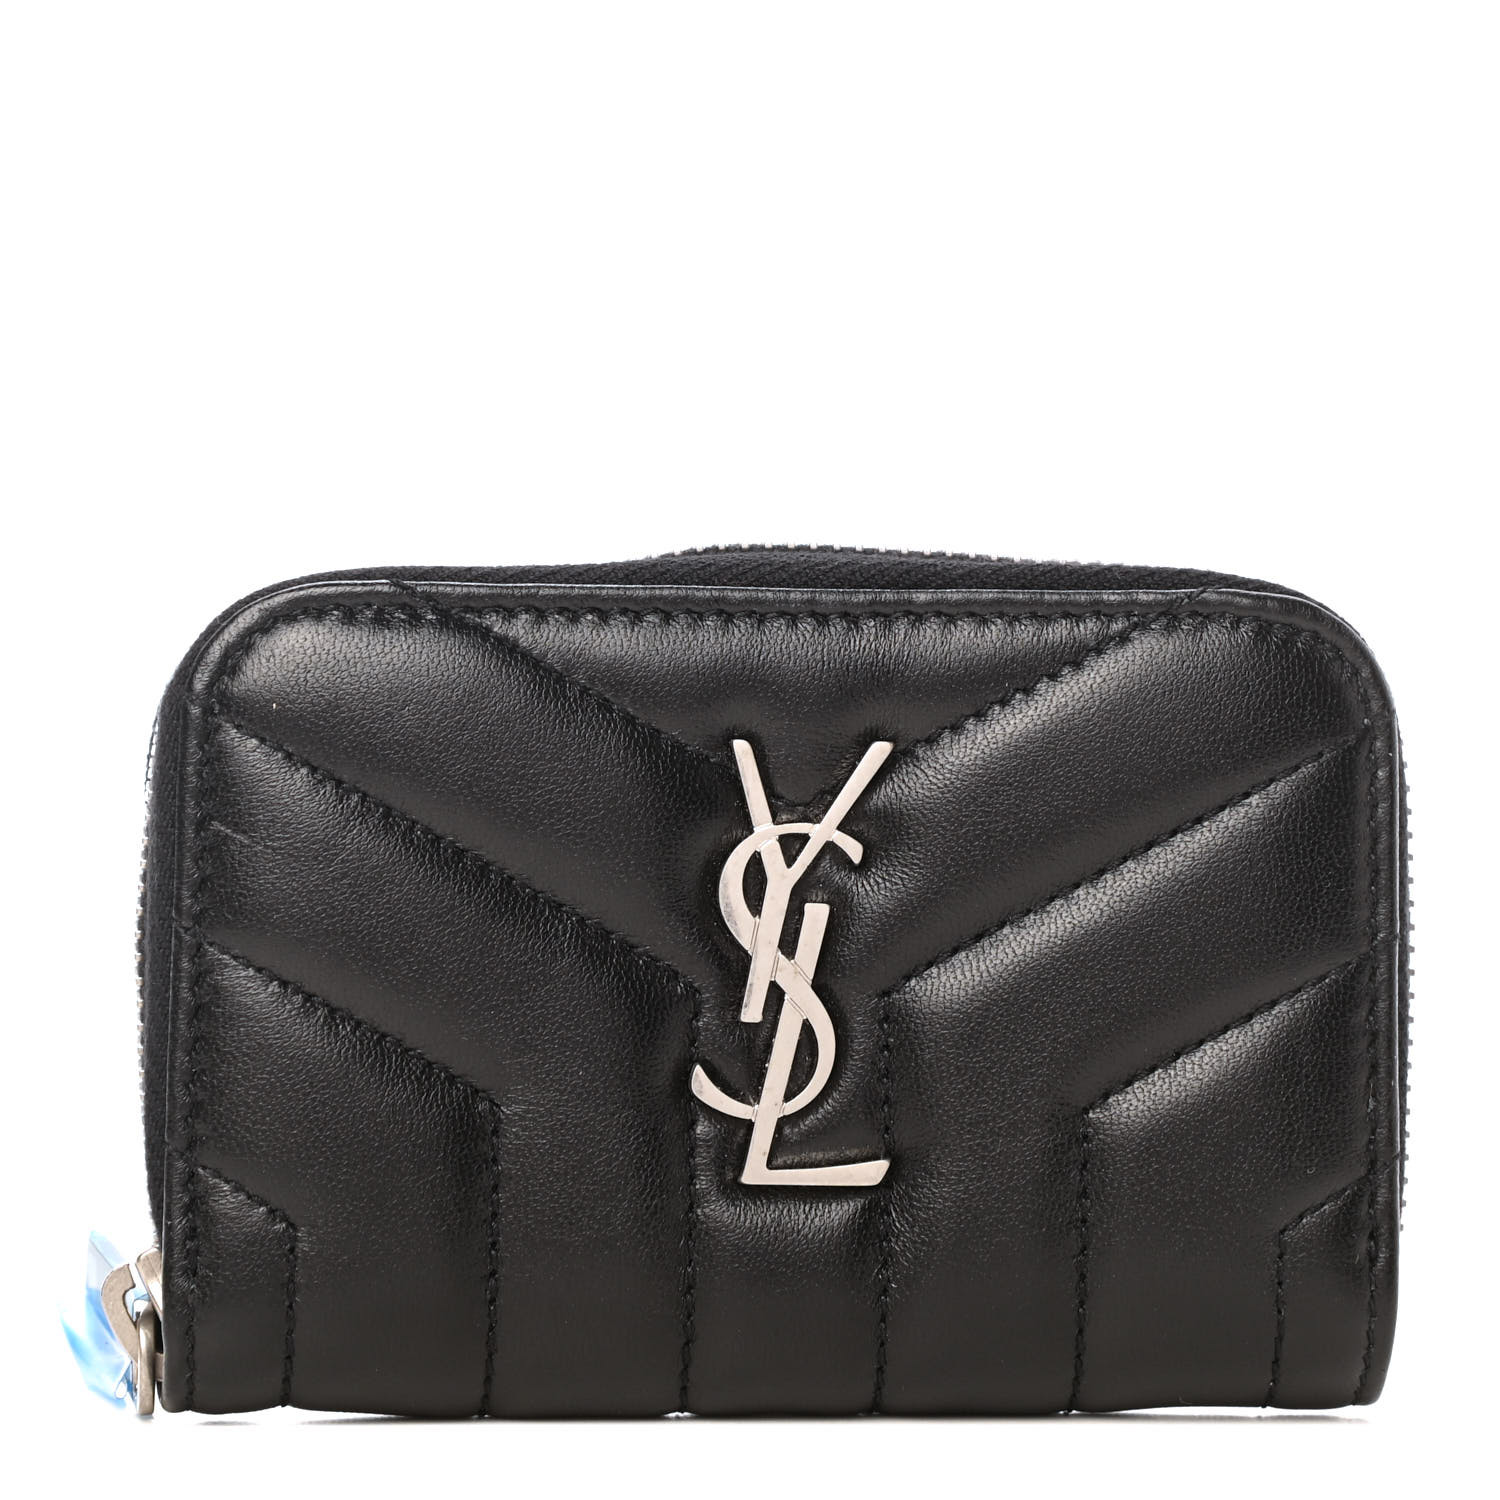 Monogram Quilted Zip-Top Bag by YSL